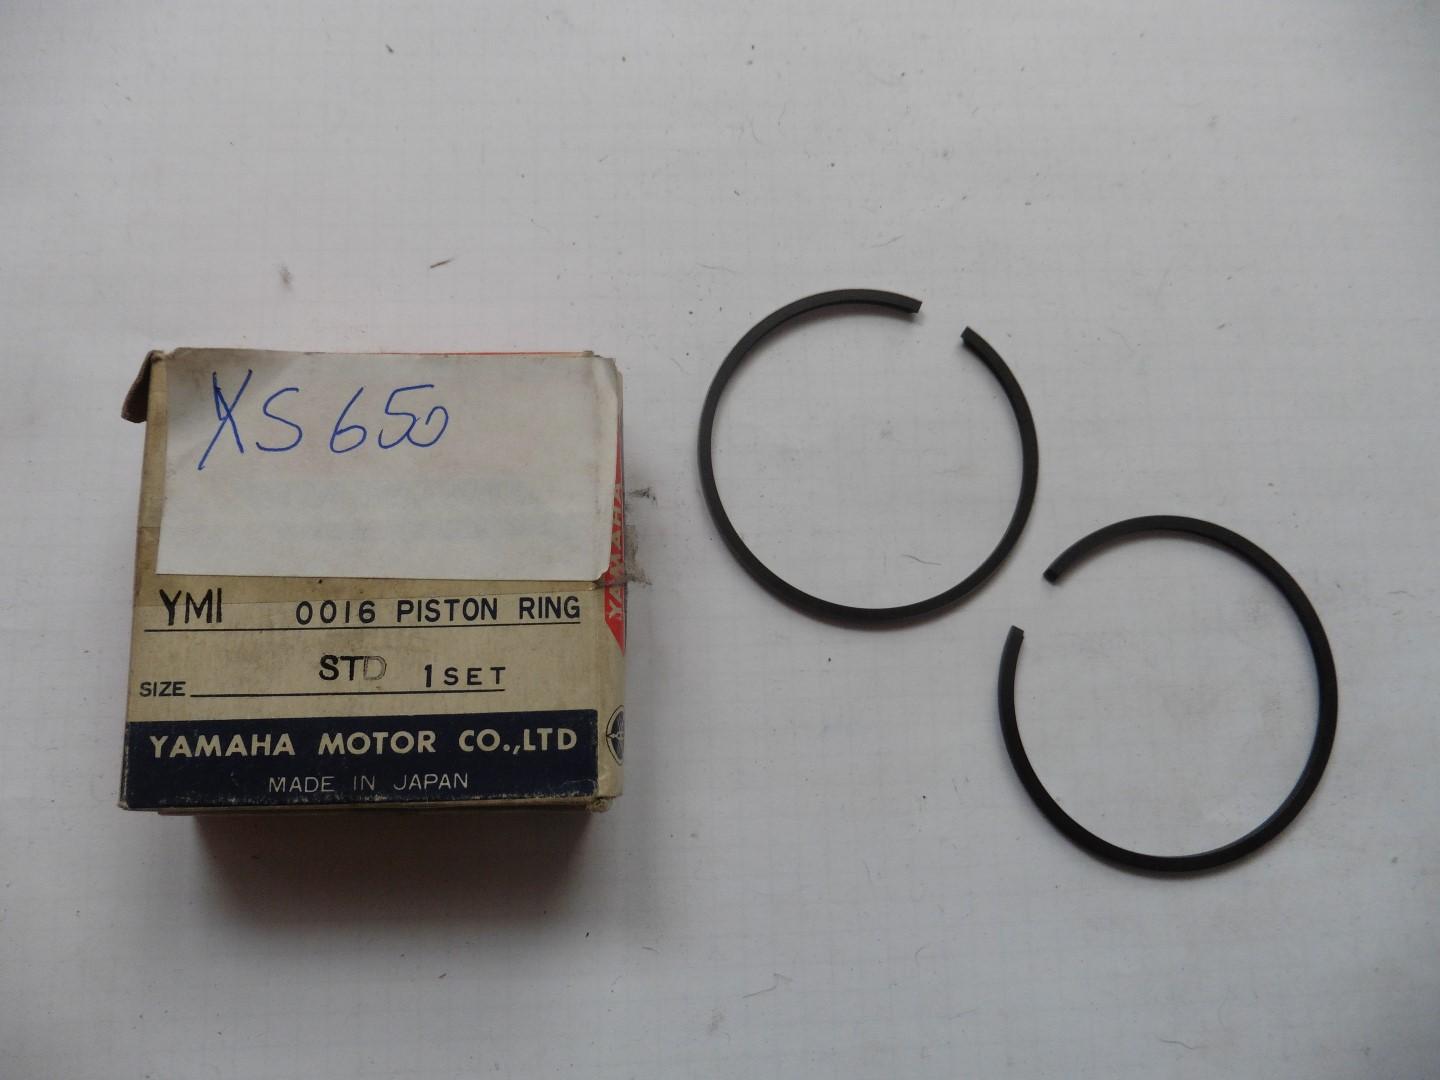 Kolbenringeset Standard piston rings kit für Yamaha Ys 650 YMI0016